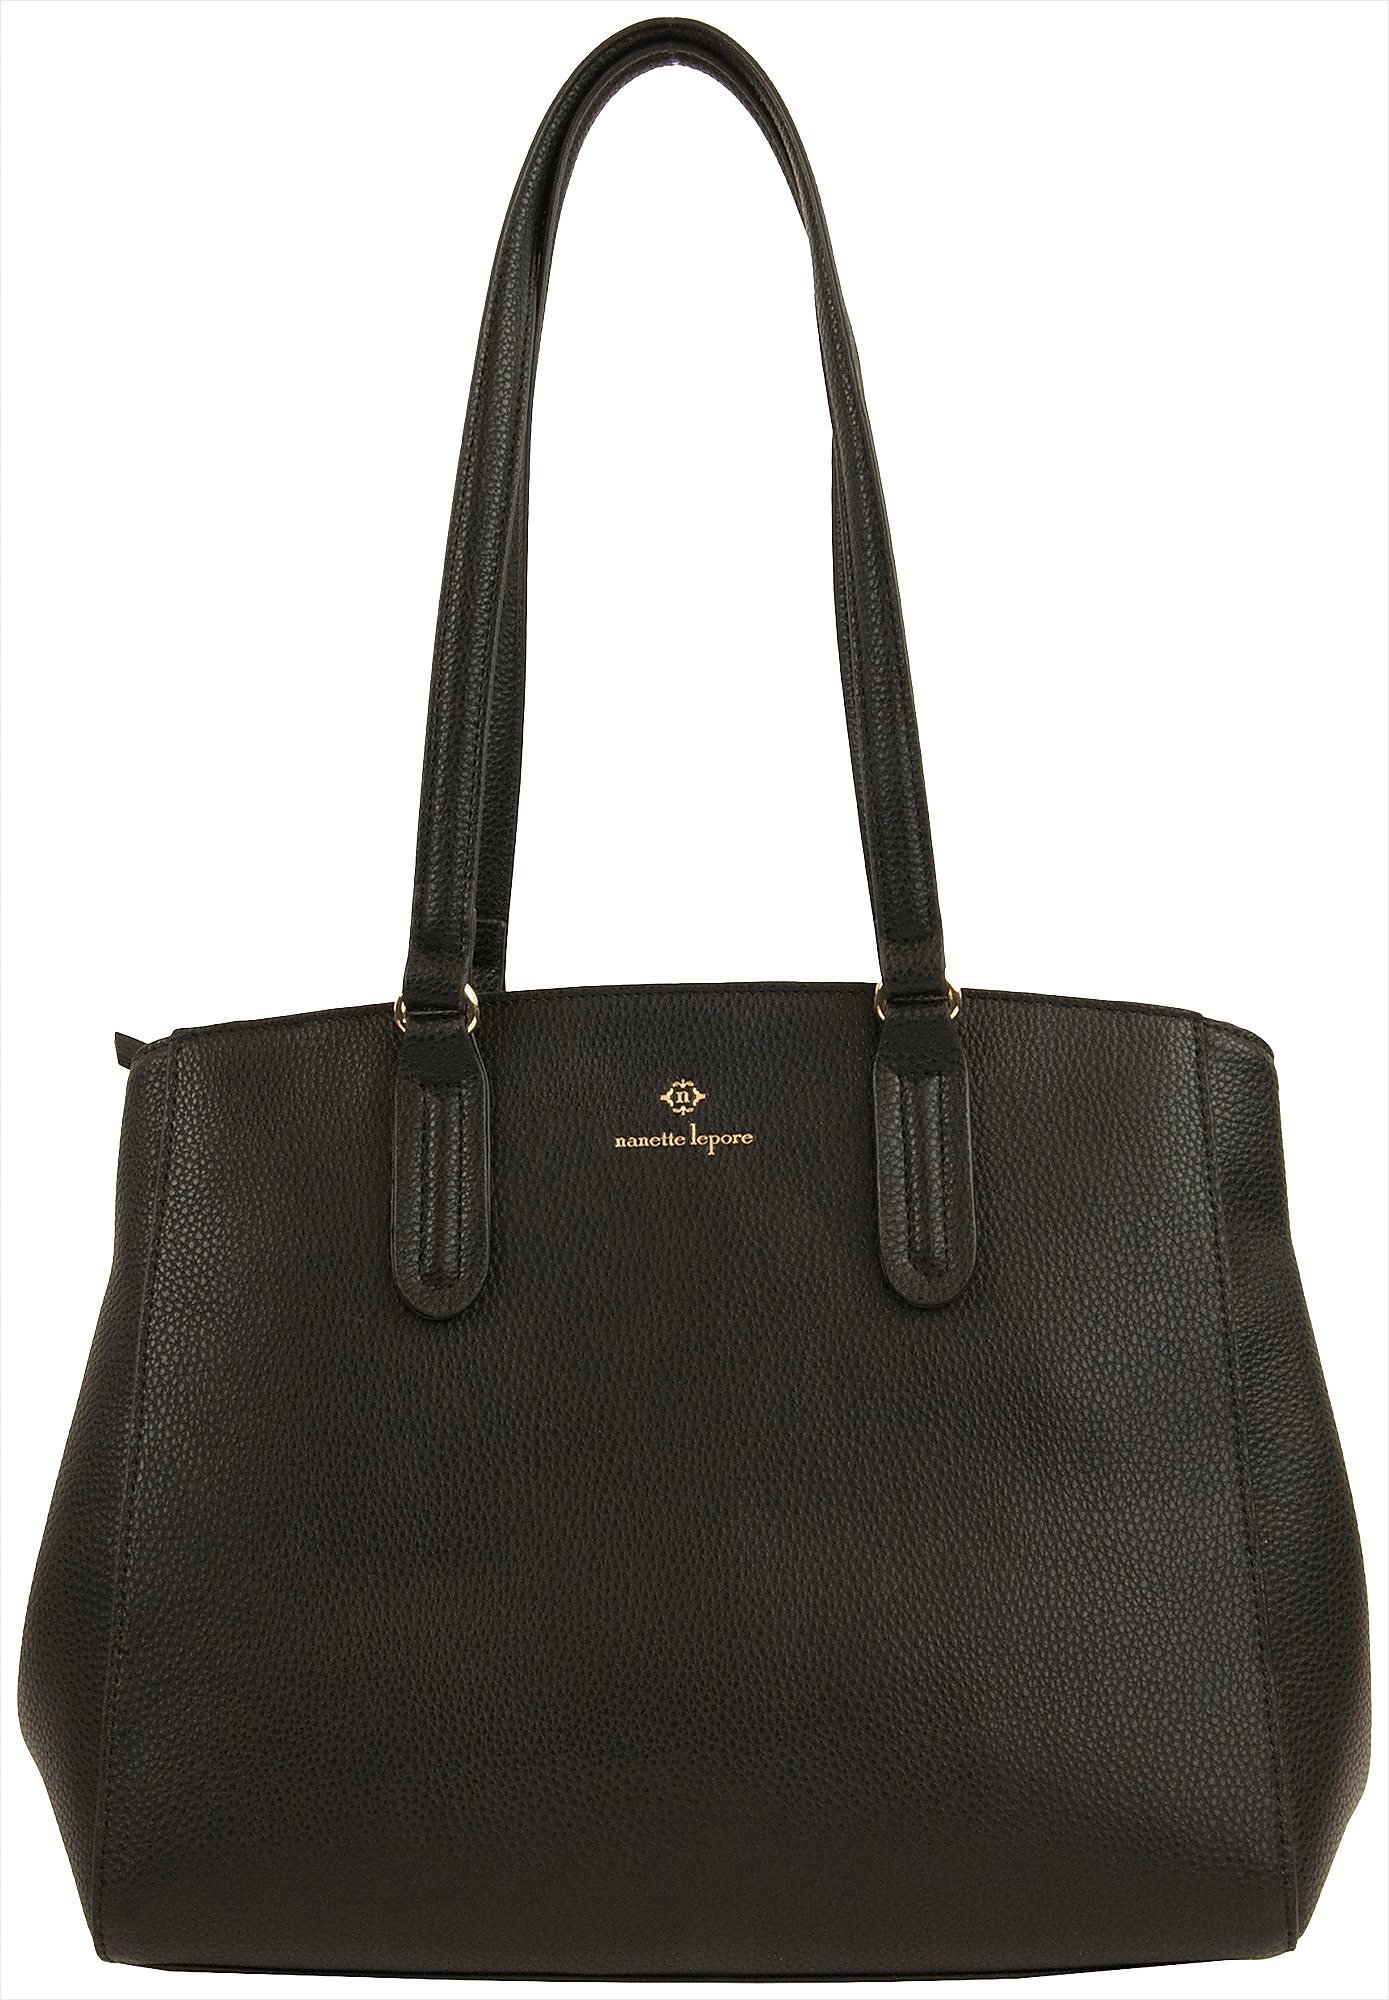 Nanette Lepore Deidra Shoulder Handbag One Size Black | eBay